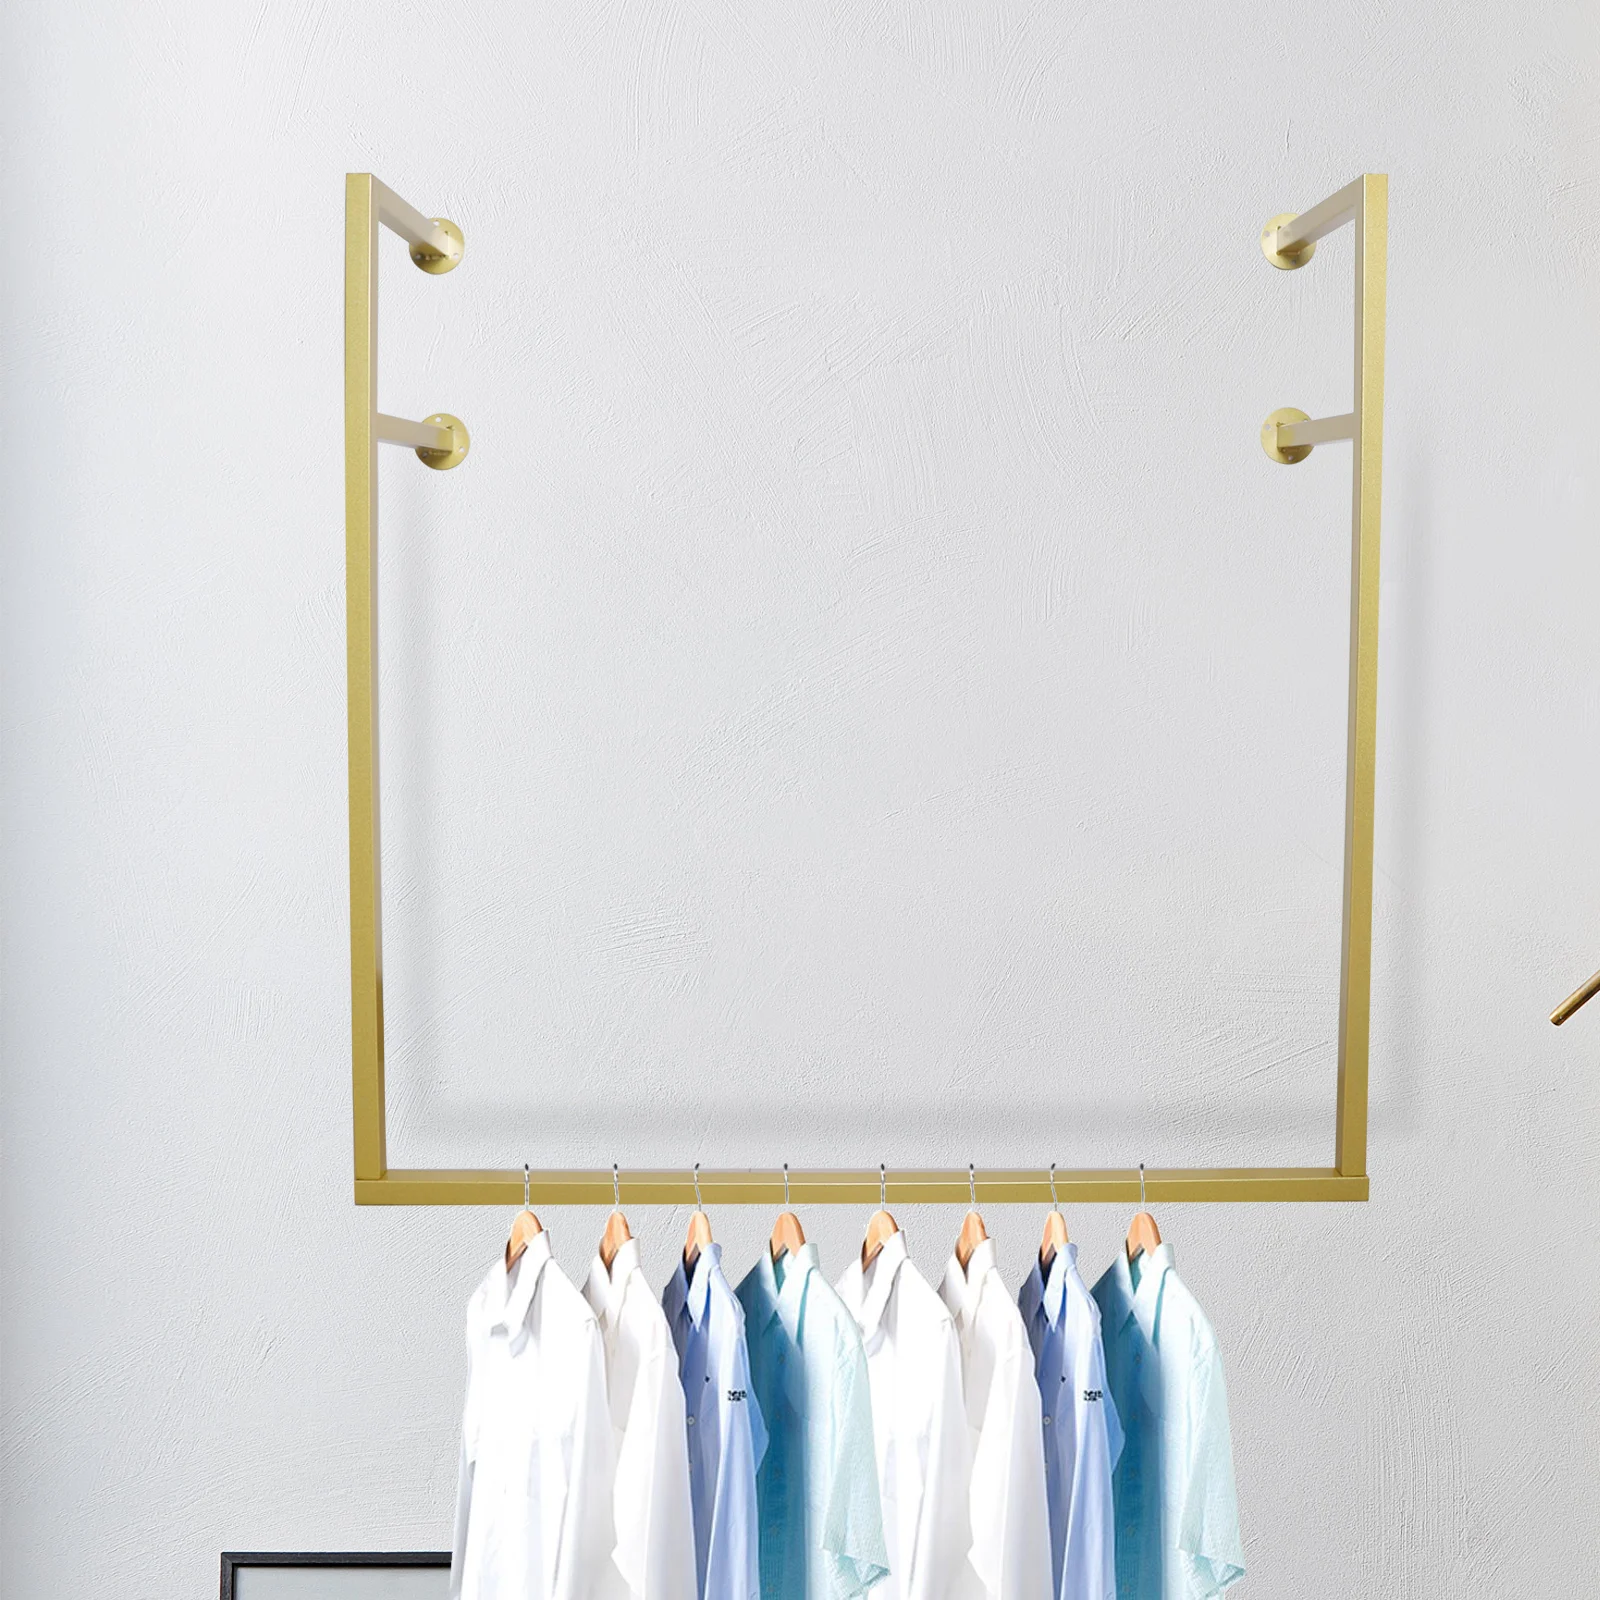 Clothing Store Simple Wall Mounted Metal Display Rack Window Hanging Garment Racks U-shaped Shelf Wedding Dress Organization